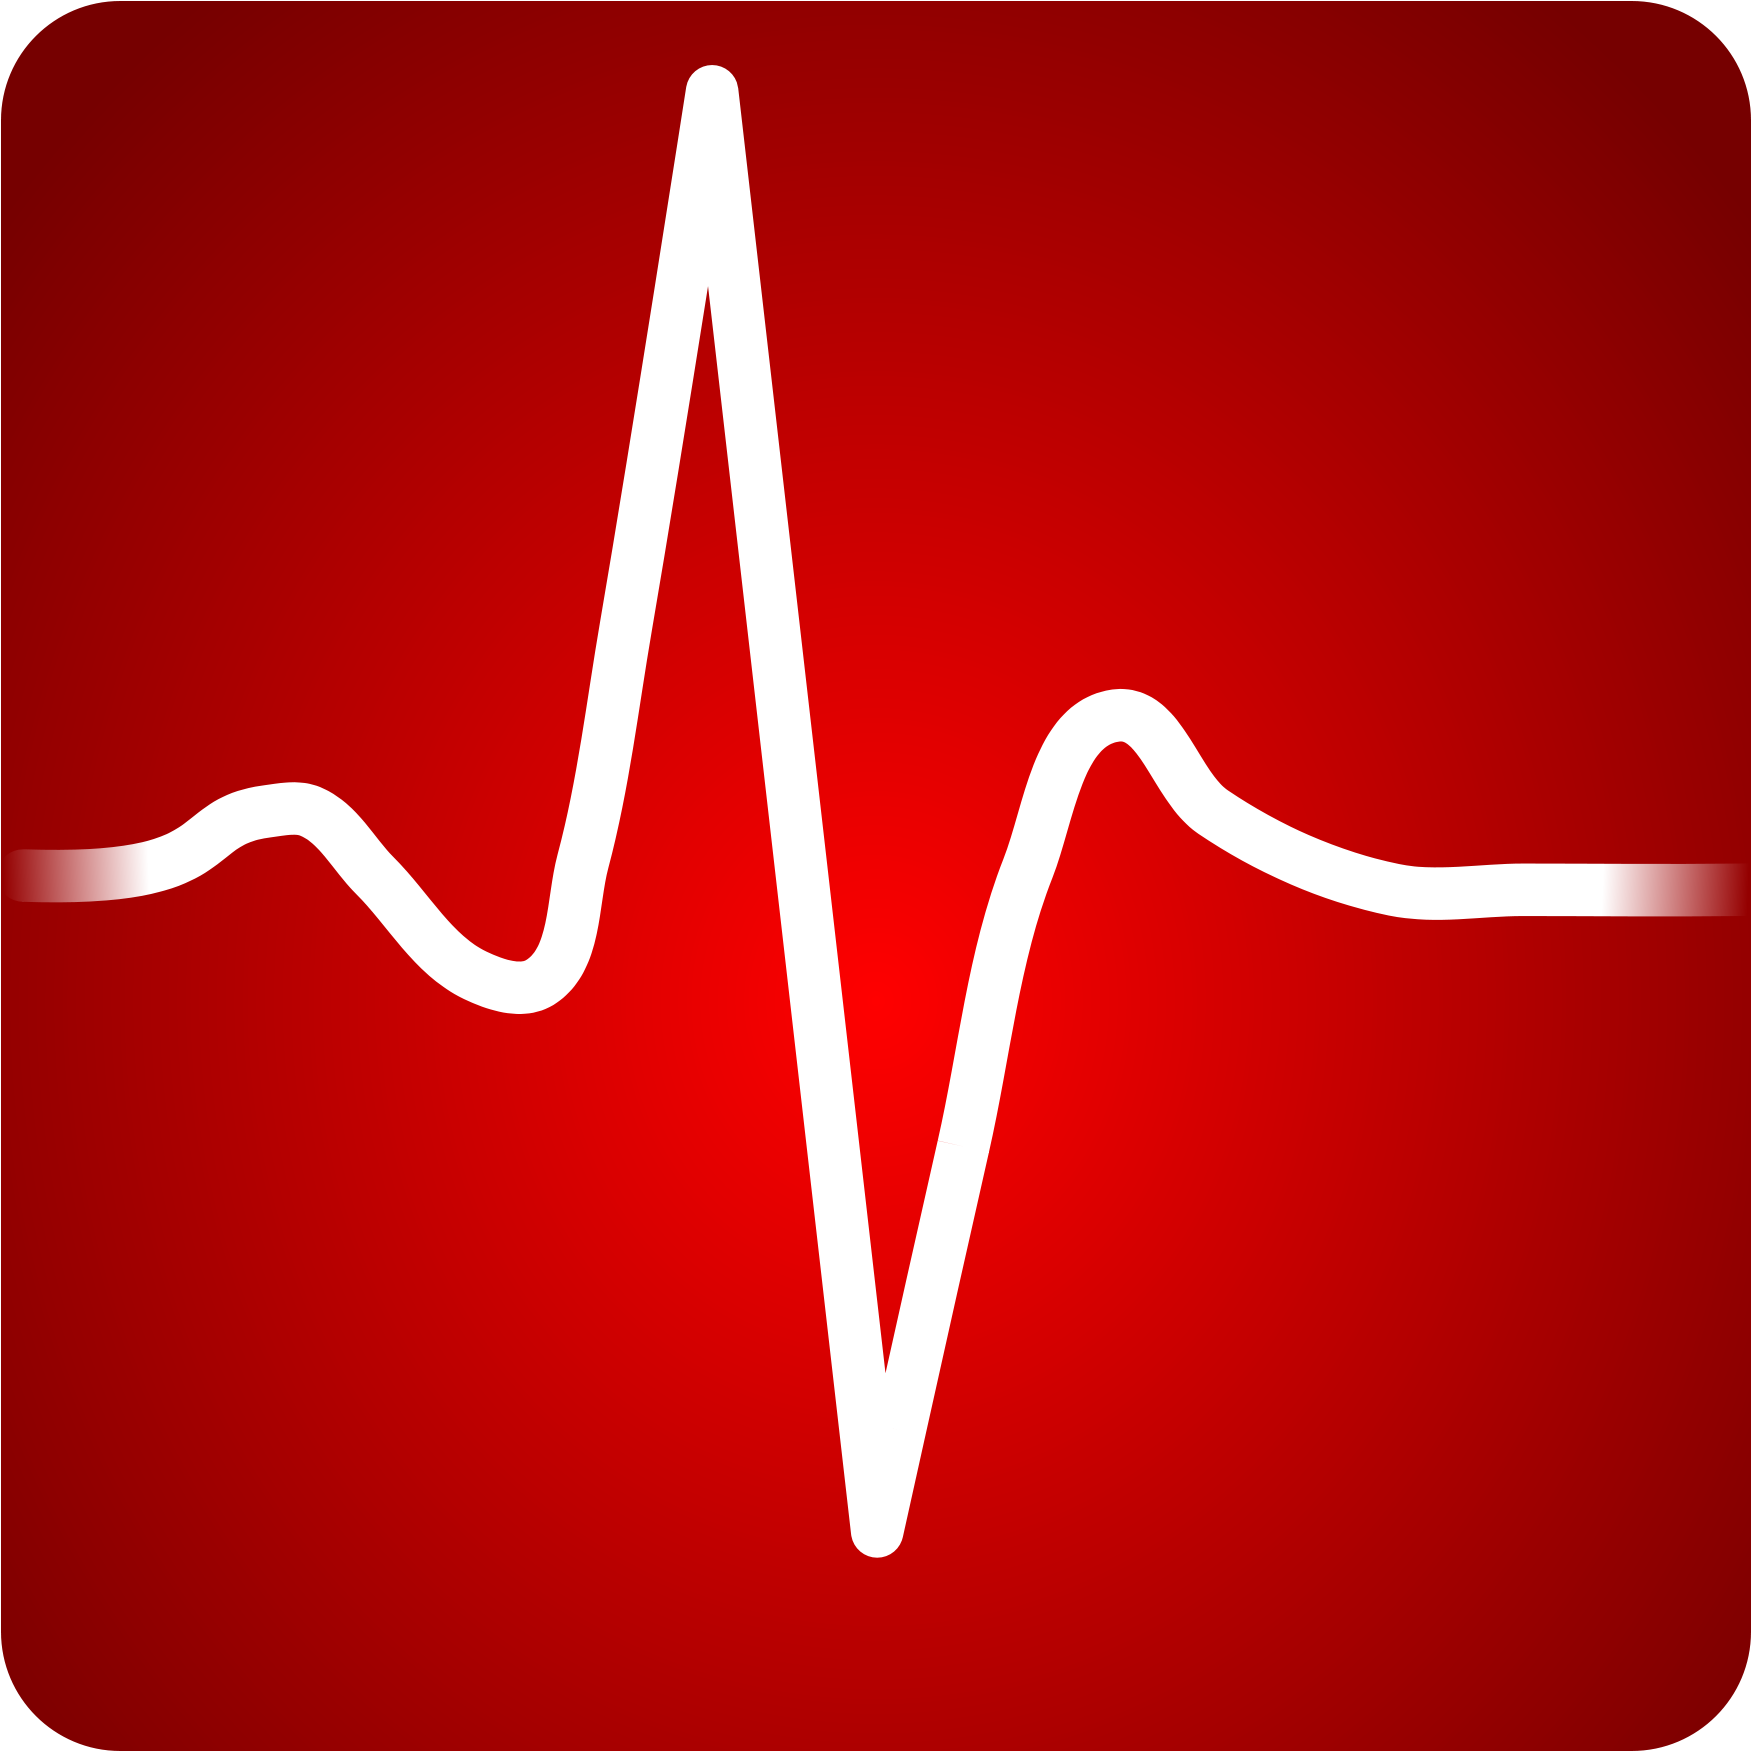 Open - Rapid Heart Beat (2000x2000)